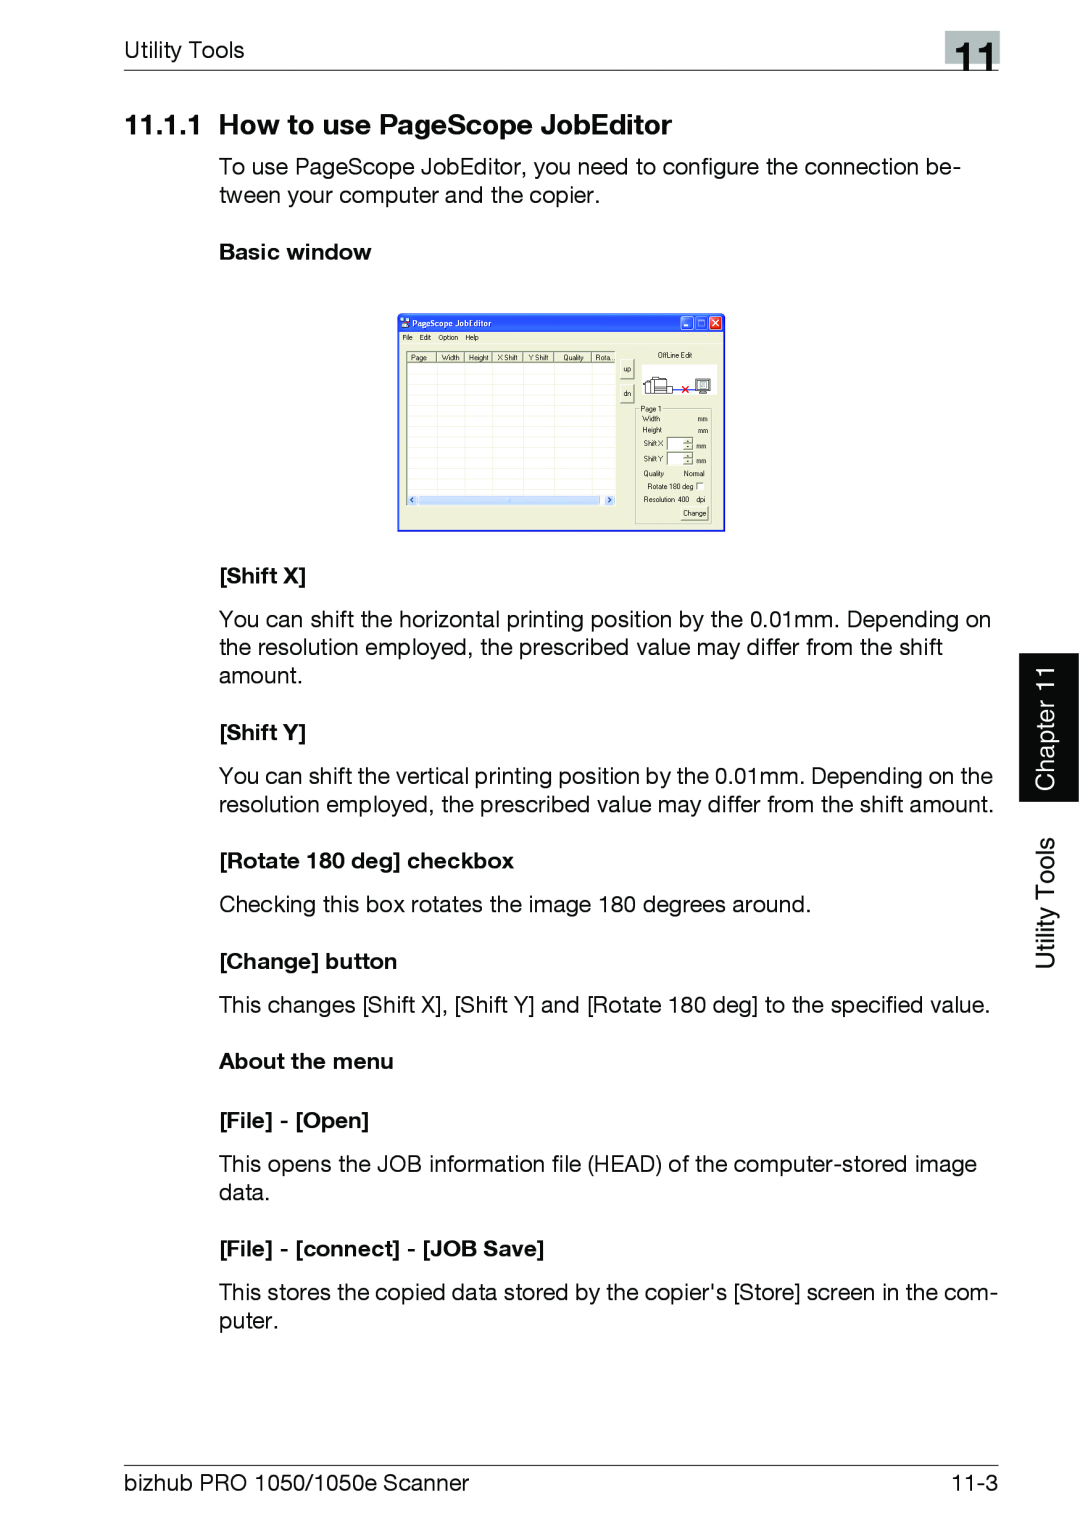 Konica Minolta 1050E How to use PageScope JobEditor, Basic window, Shift Y, Rotate 180 deg checkbox, Change button 